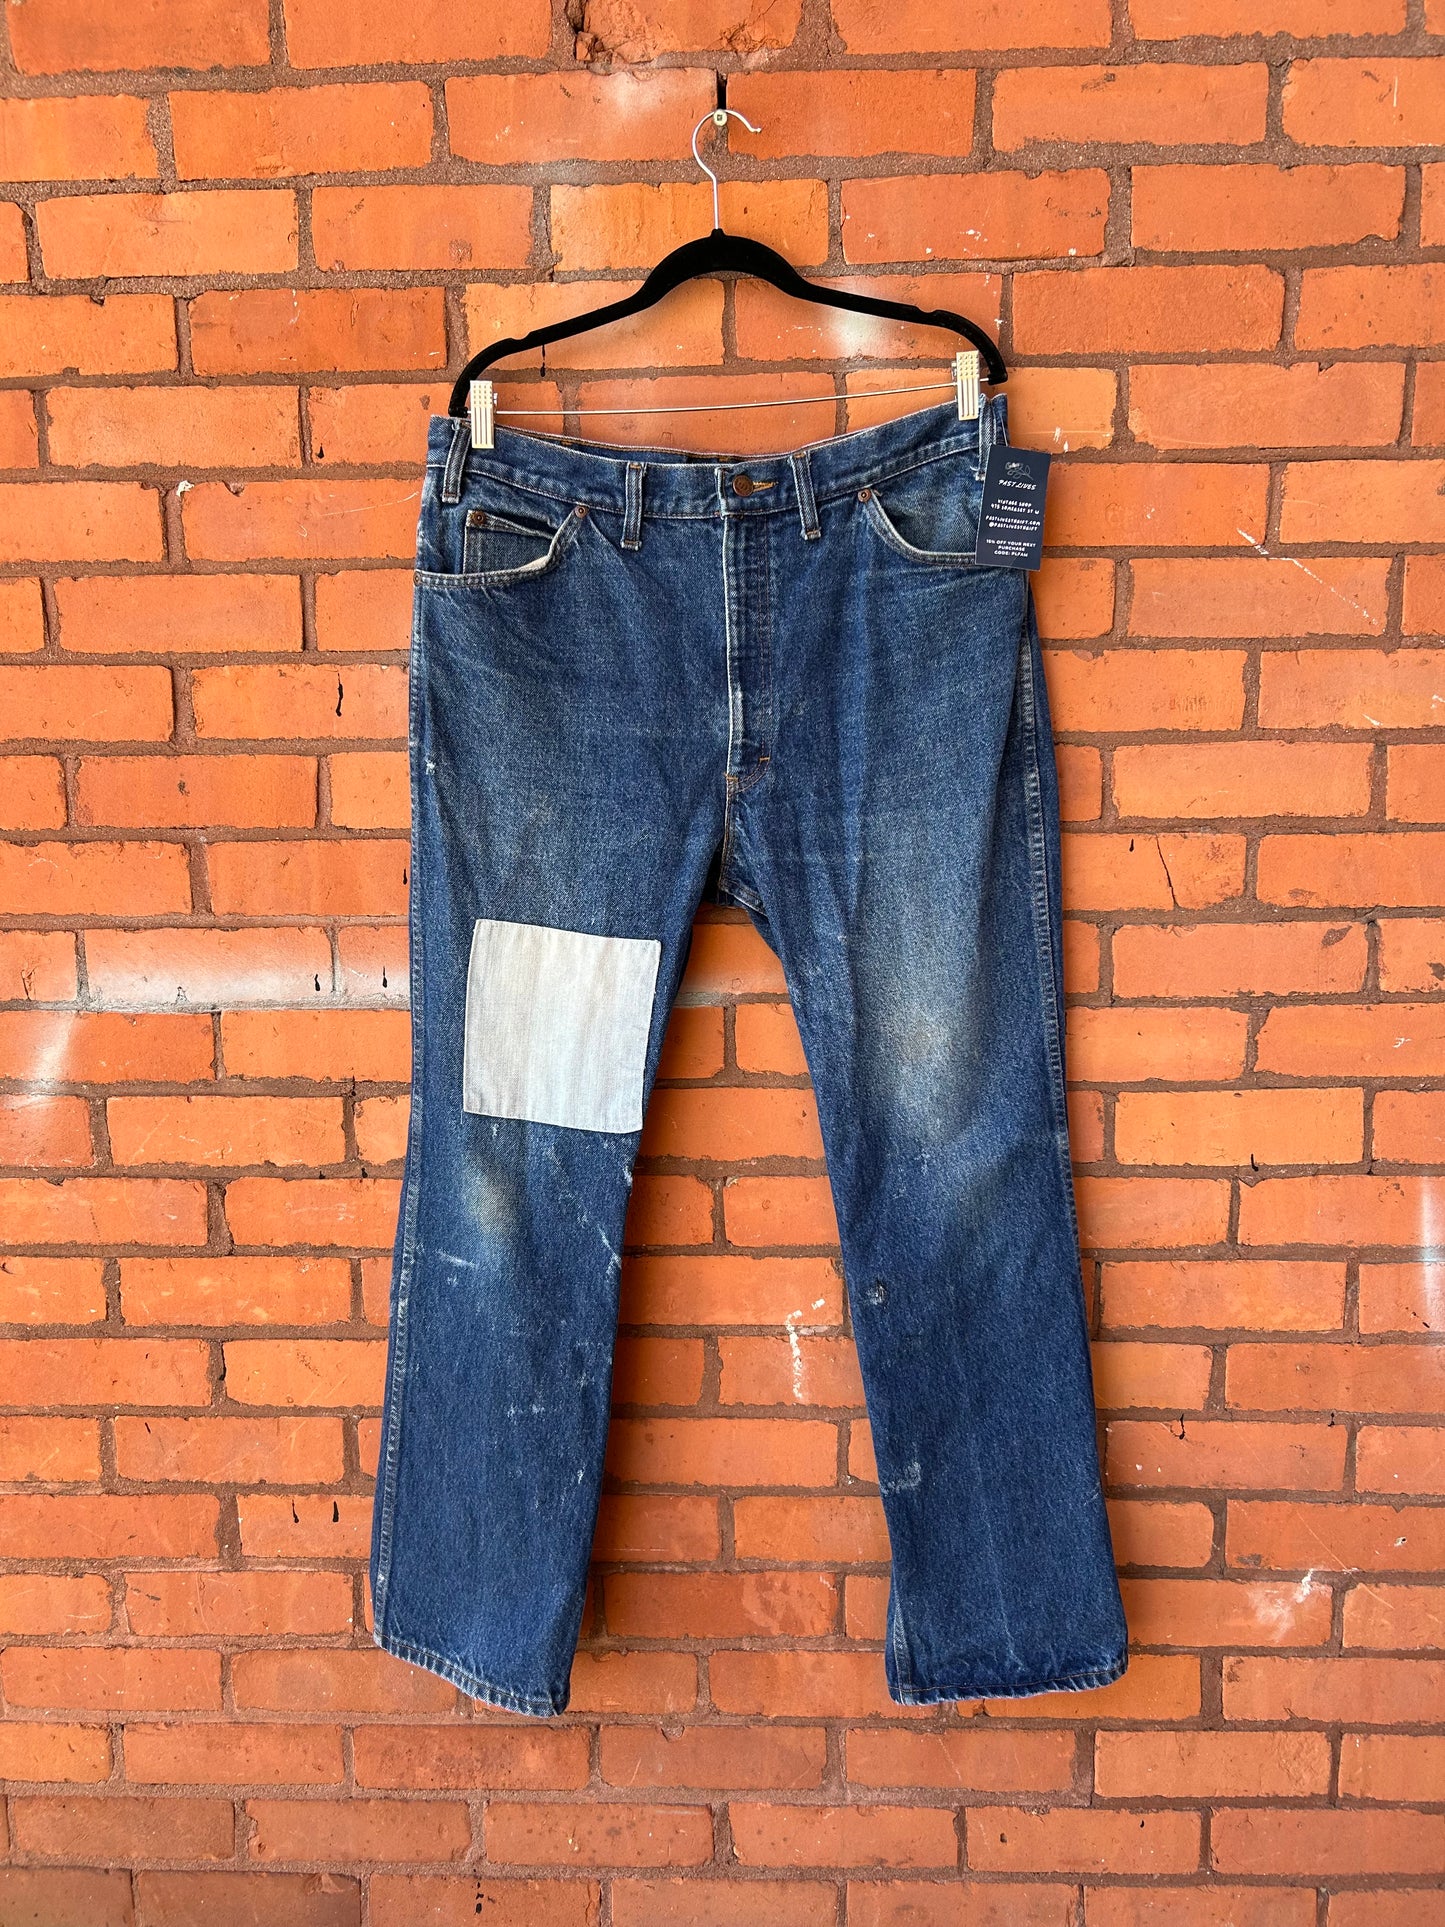 90’s Vintage Patched Distressed Dark Wash Jeans / 36 Waist